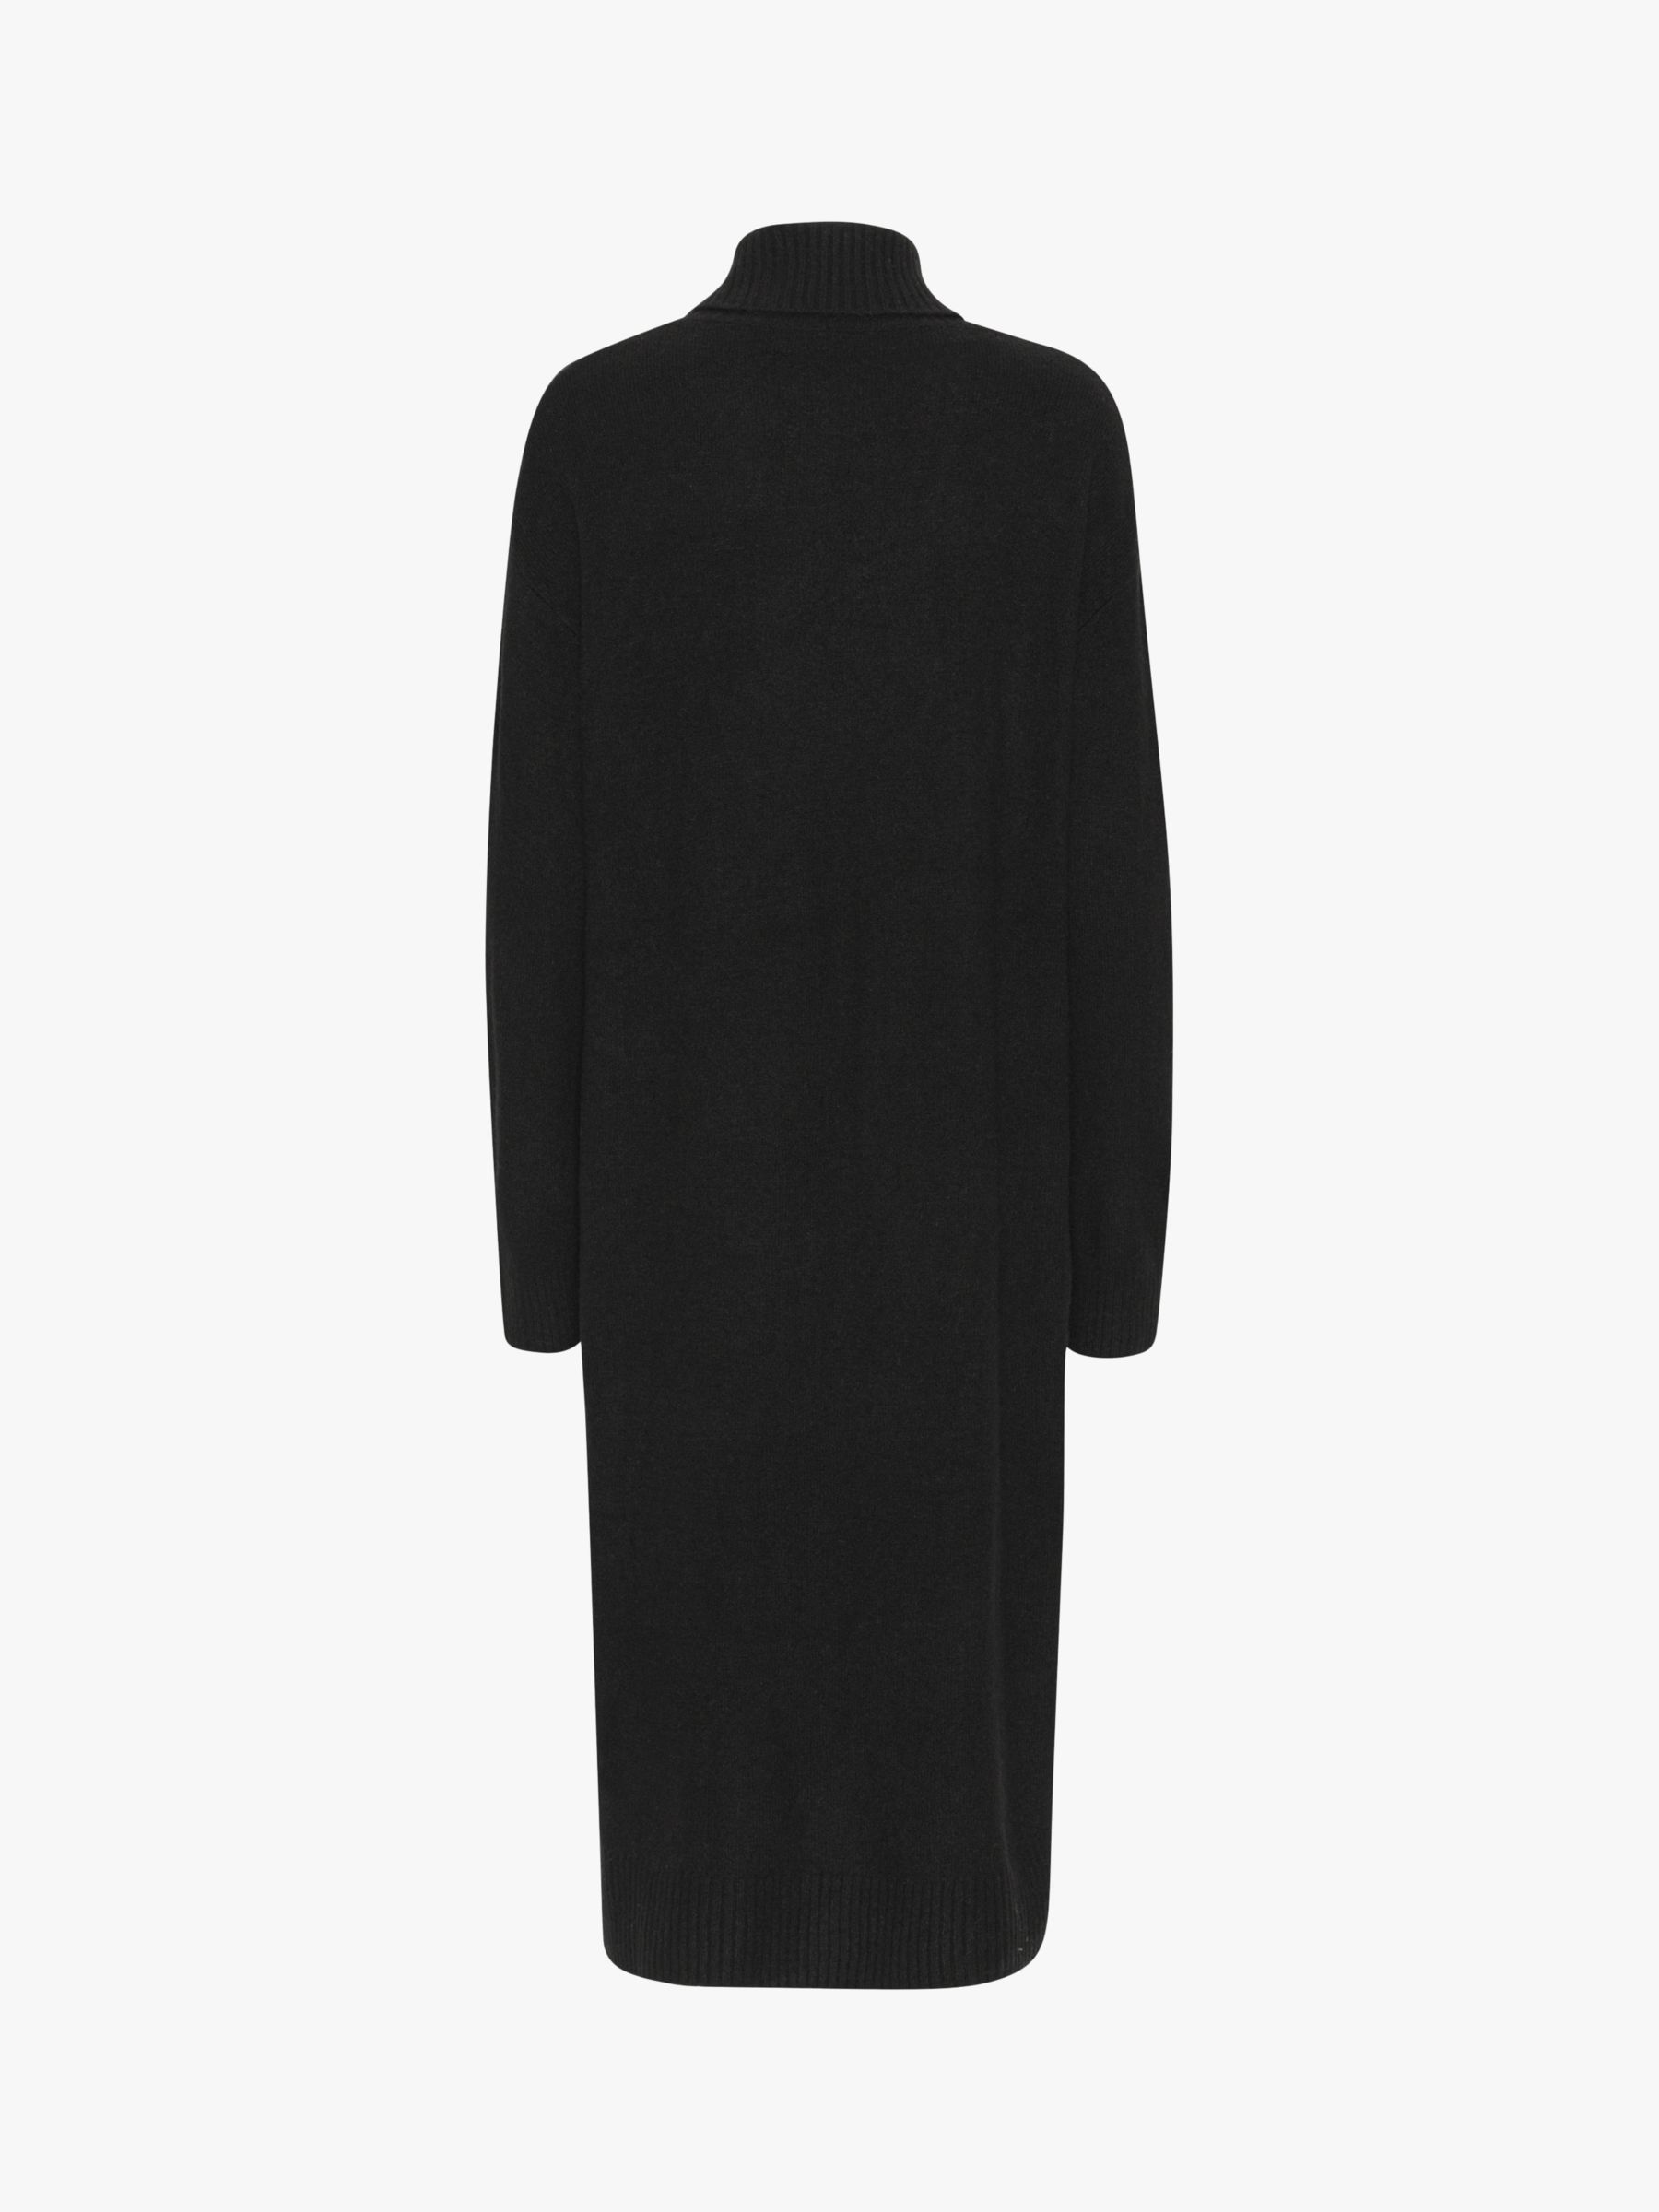 A-VIEW Penny Knit Wool Blend Jumper Dress, Black at John Lewis & Partners